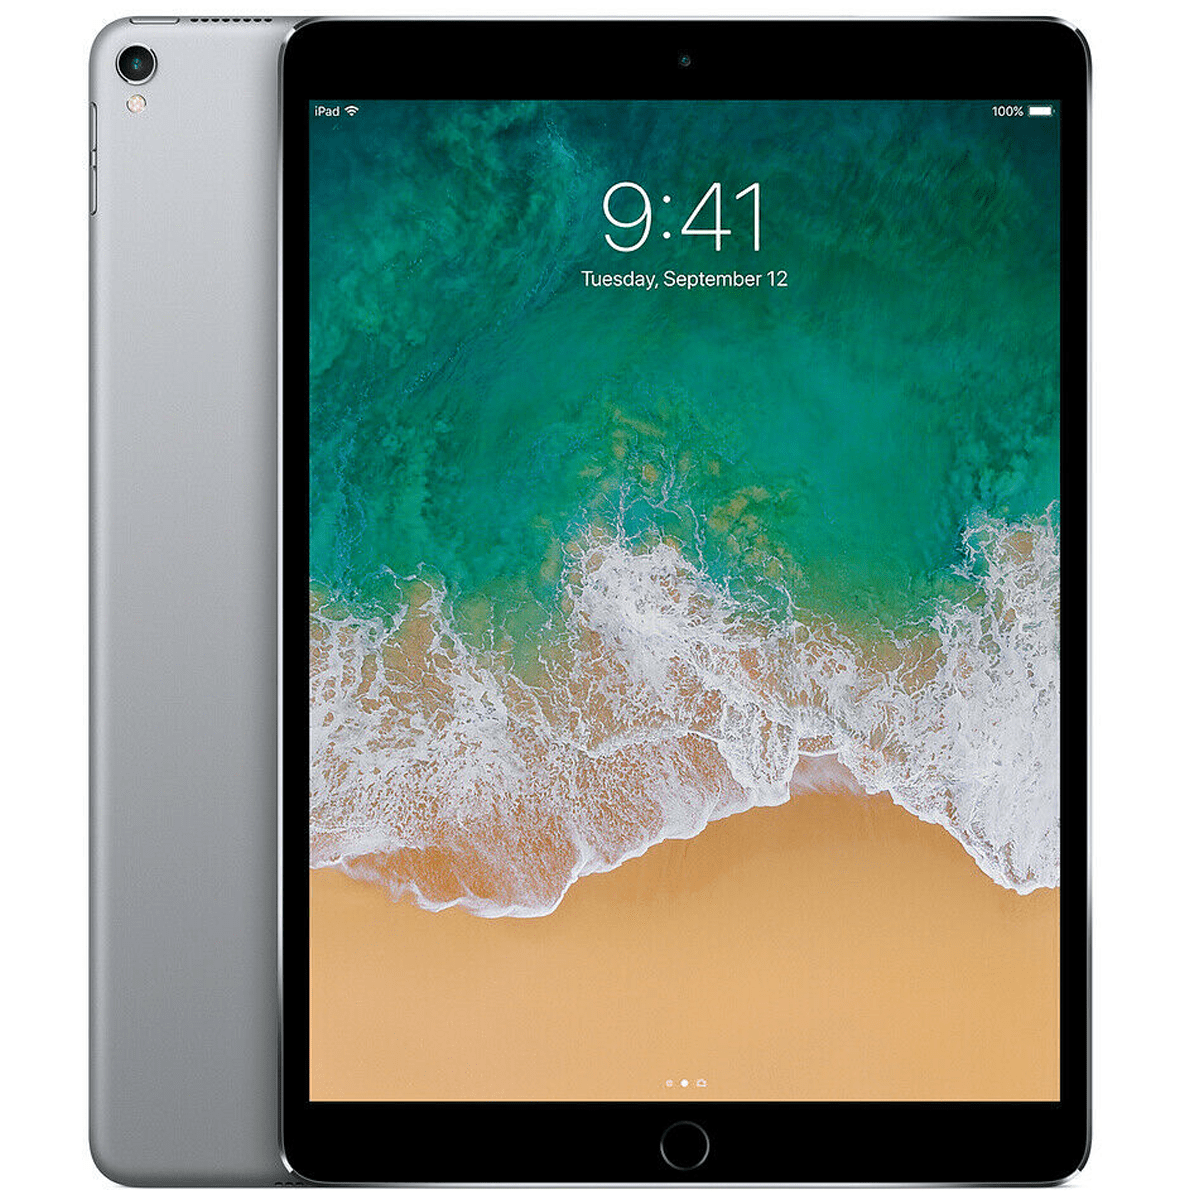 Apple 10.5-inch iPad Pro (2017) Wi-Fi, 256GB - Space Grey (MPDY2LL/A) - Refurbished Excellent